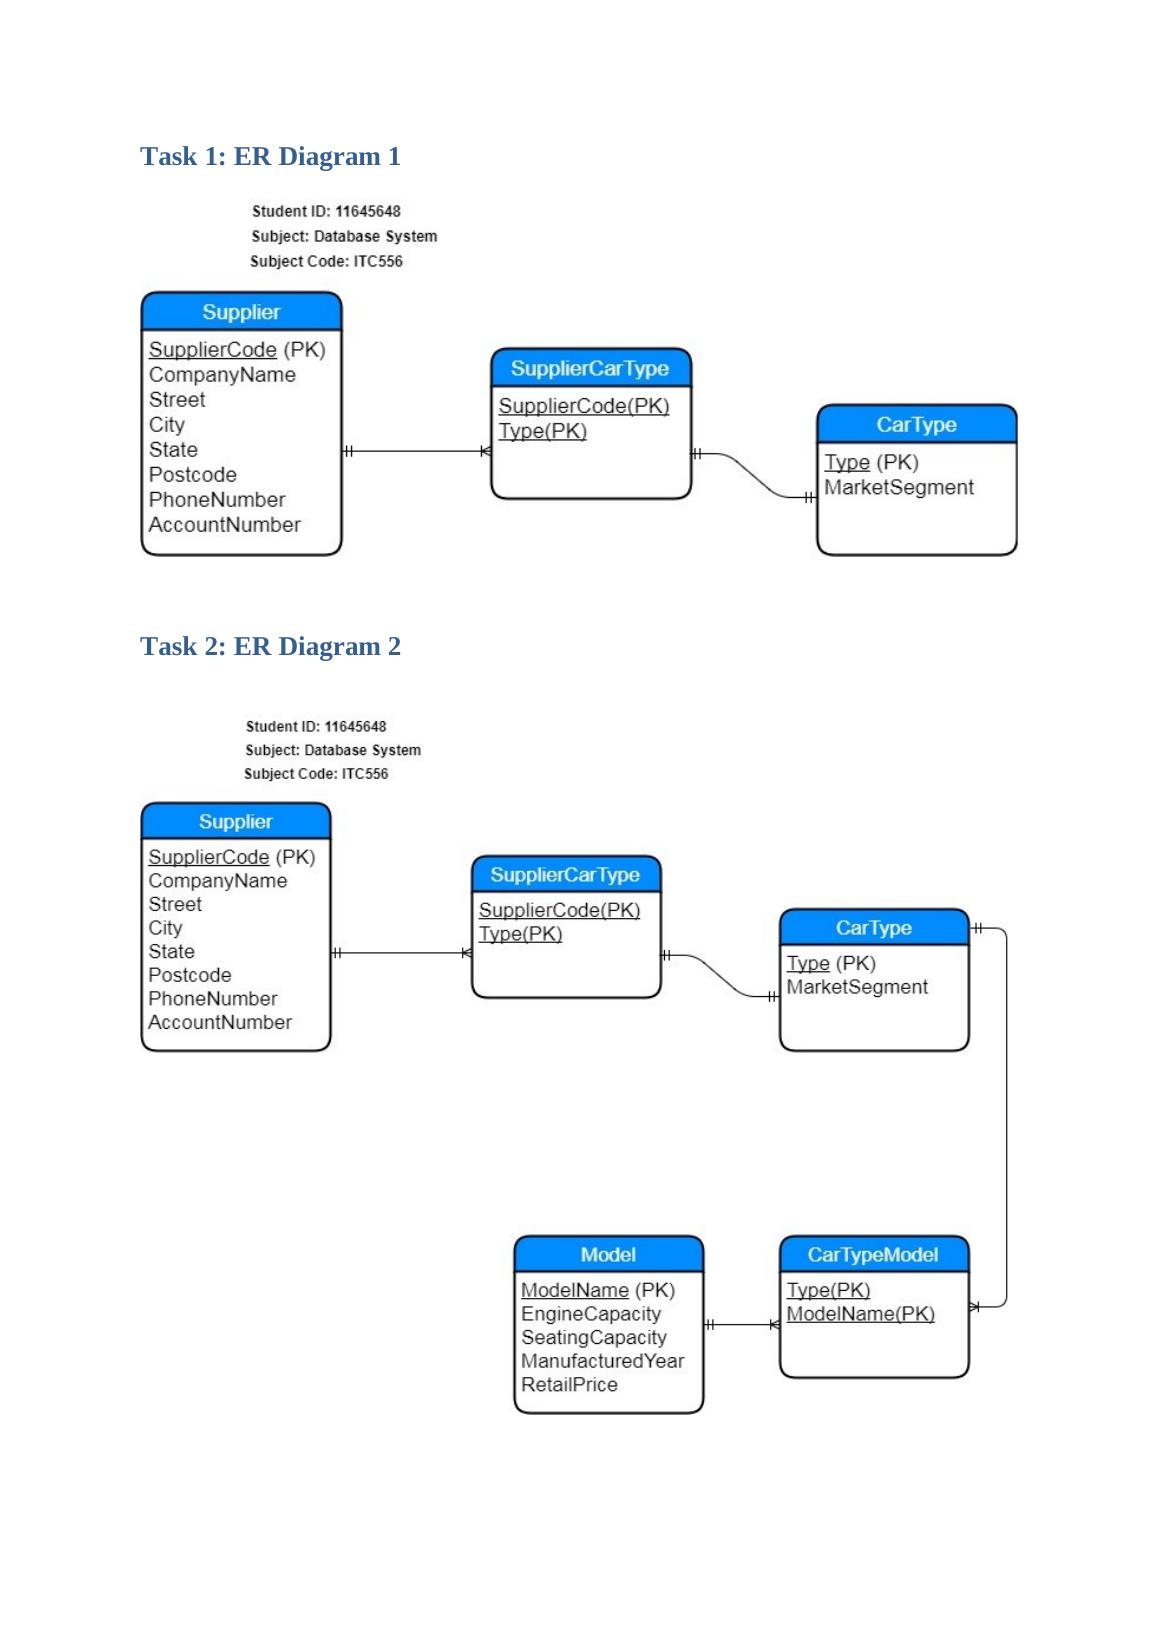 31061 - Business Case - Database Report on ER Diagram_3